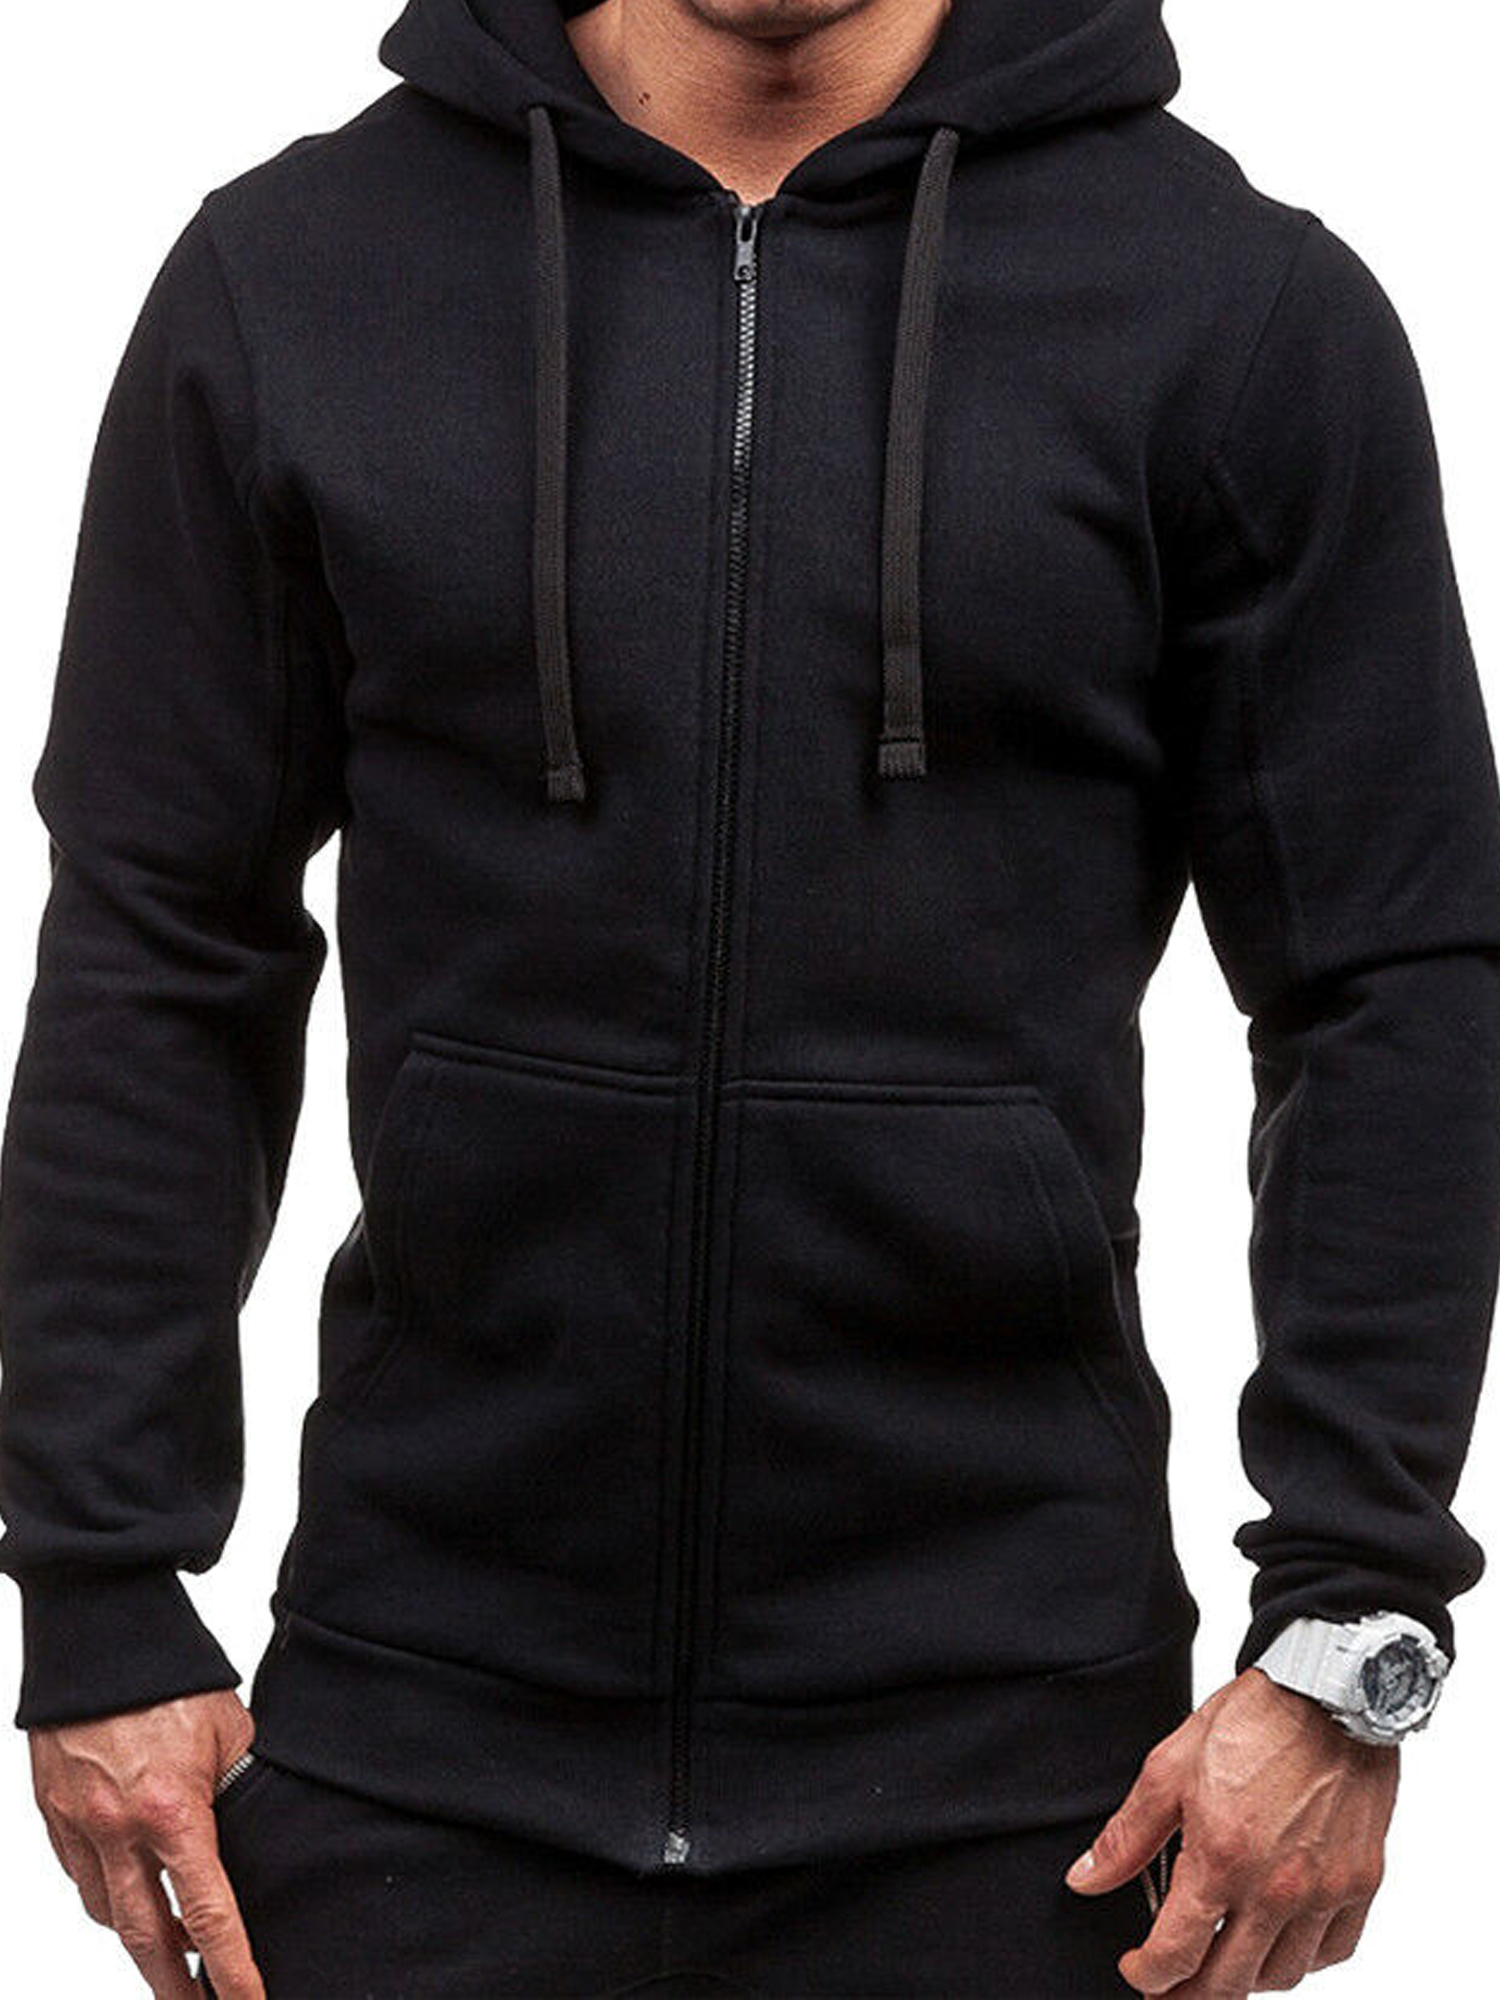 black sweatshirt with zip pocket and zippered cuff